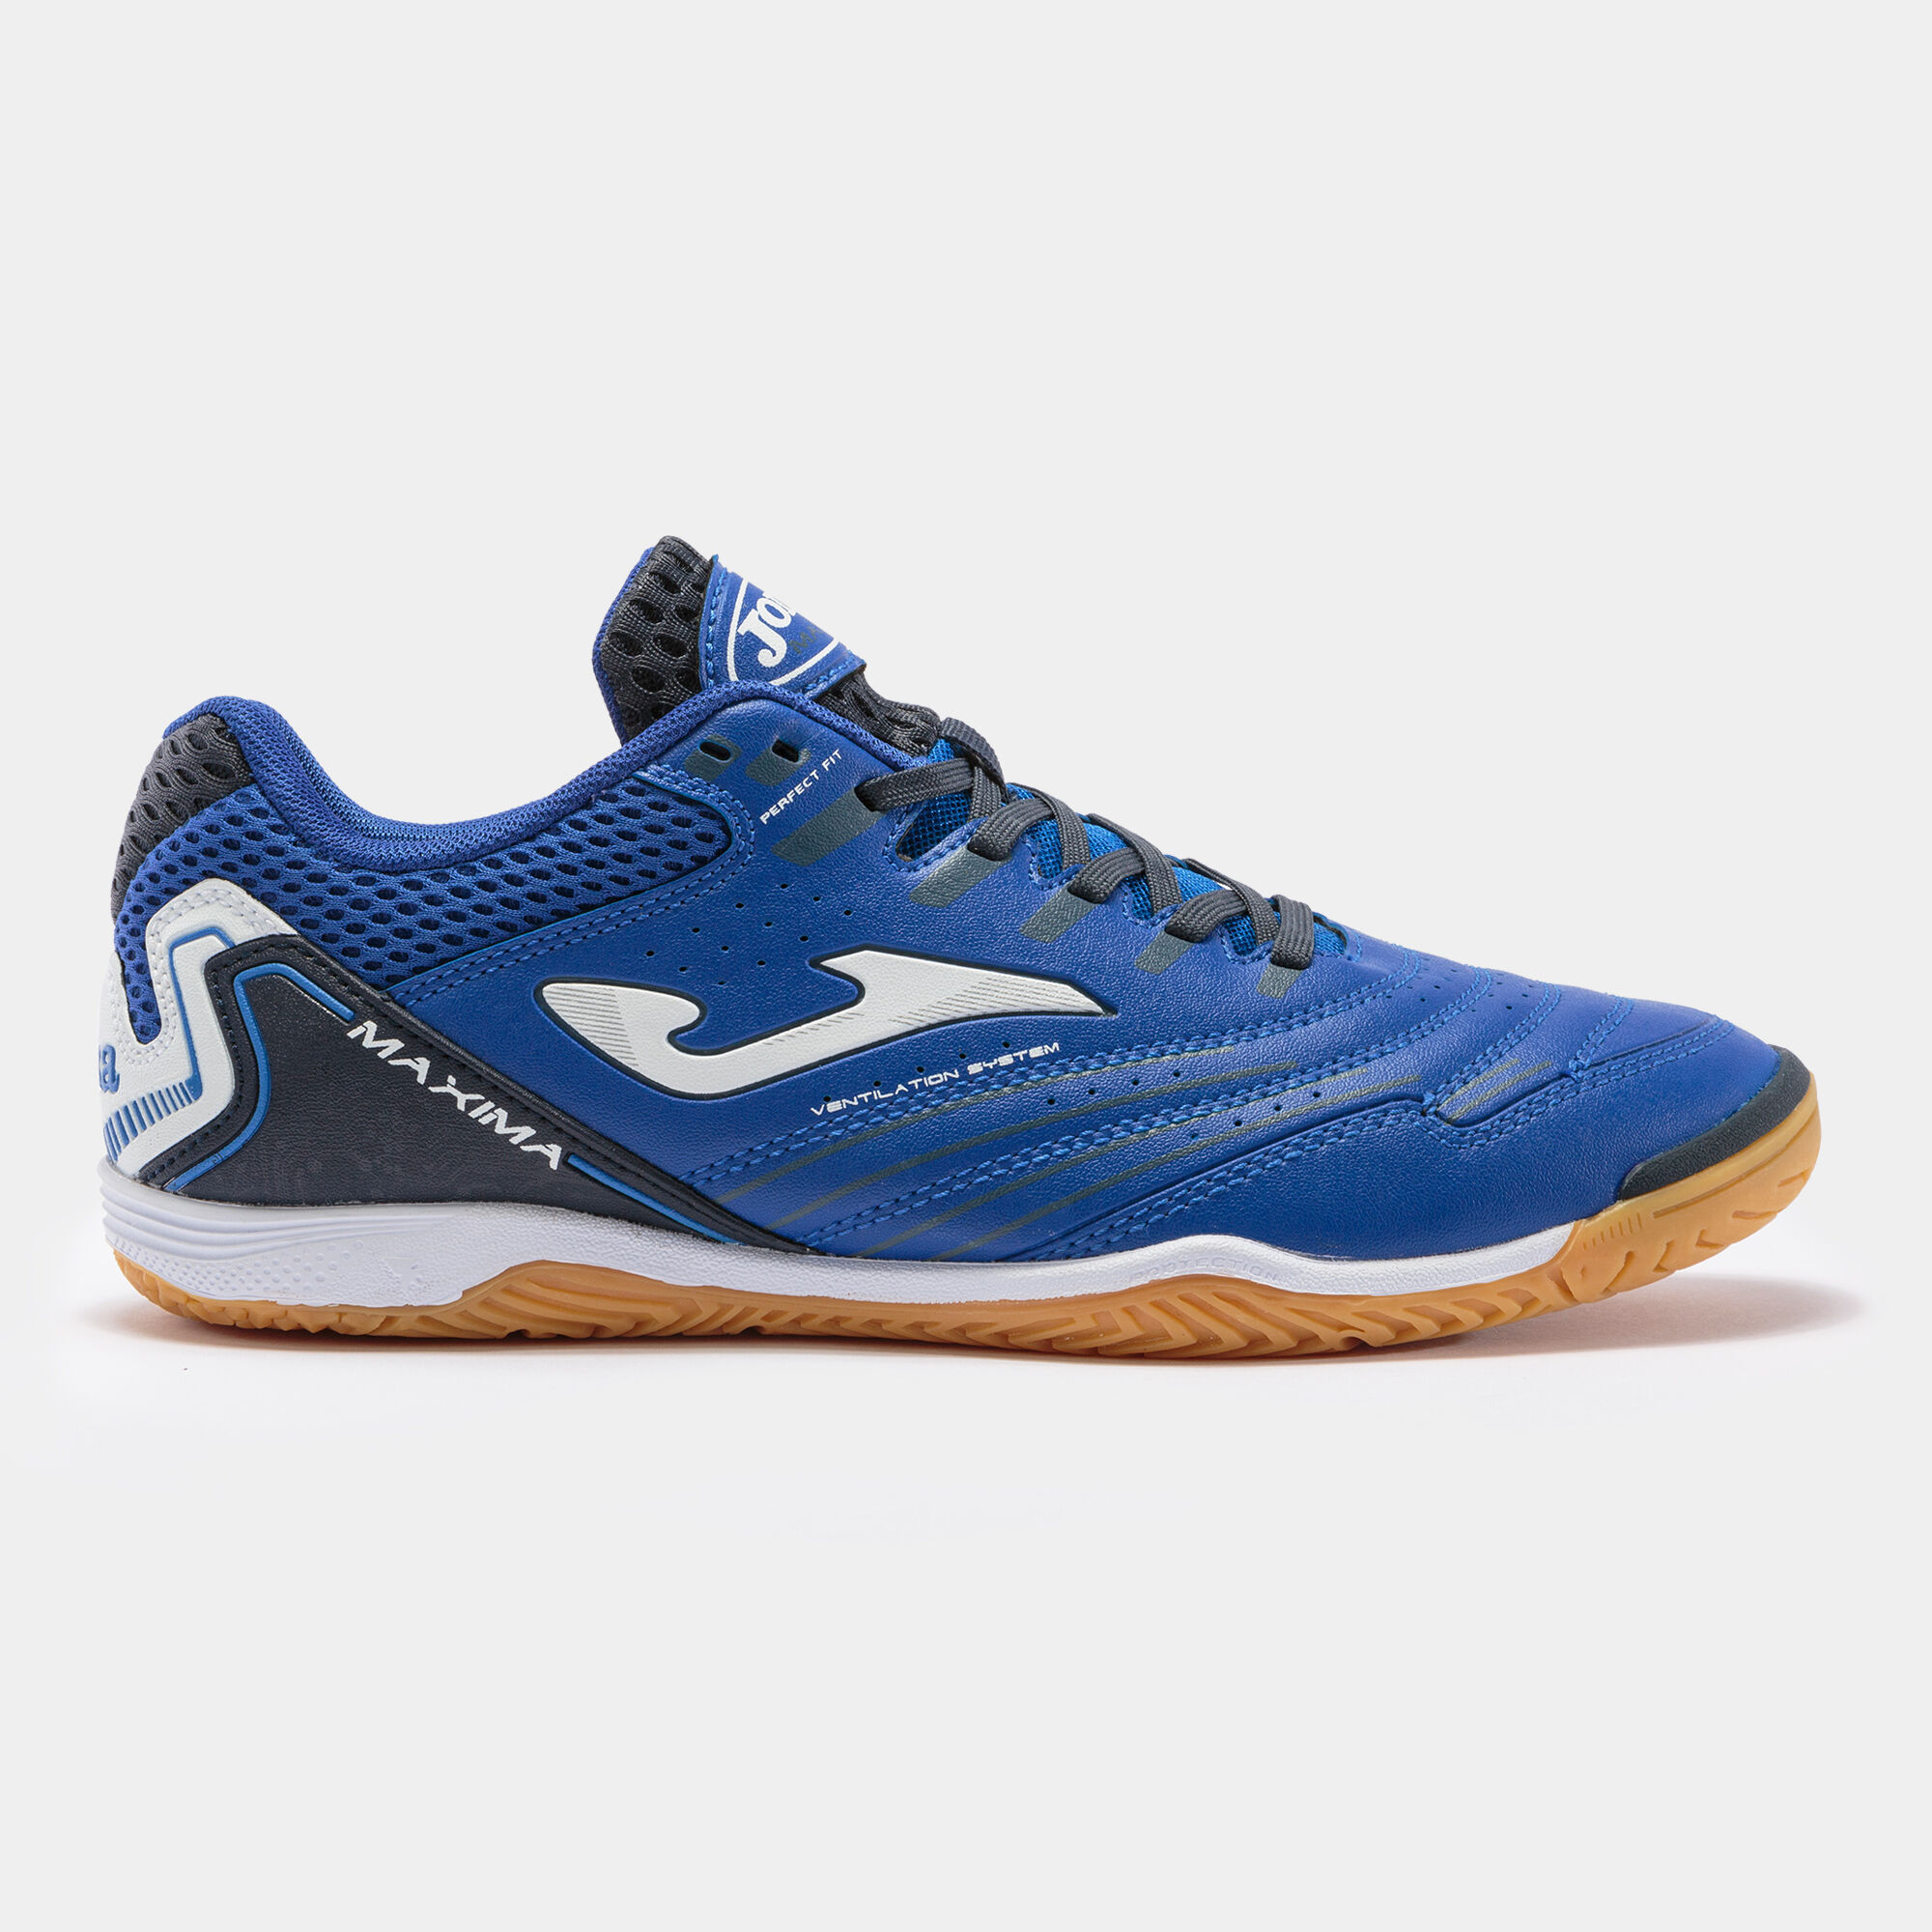 Chaussures futsal Maxima 21 indoor bleu roi